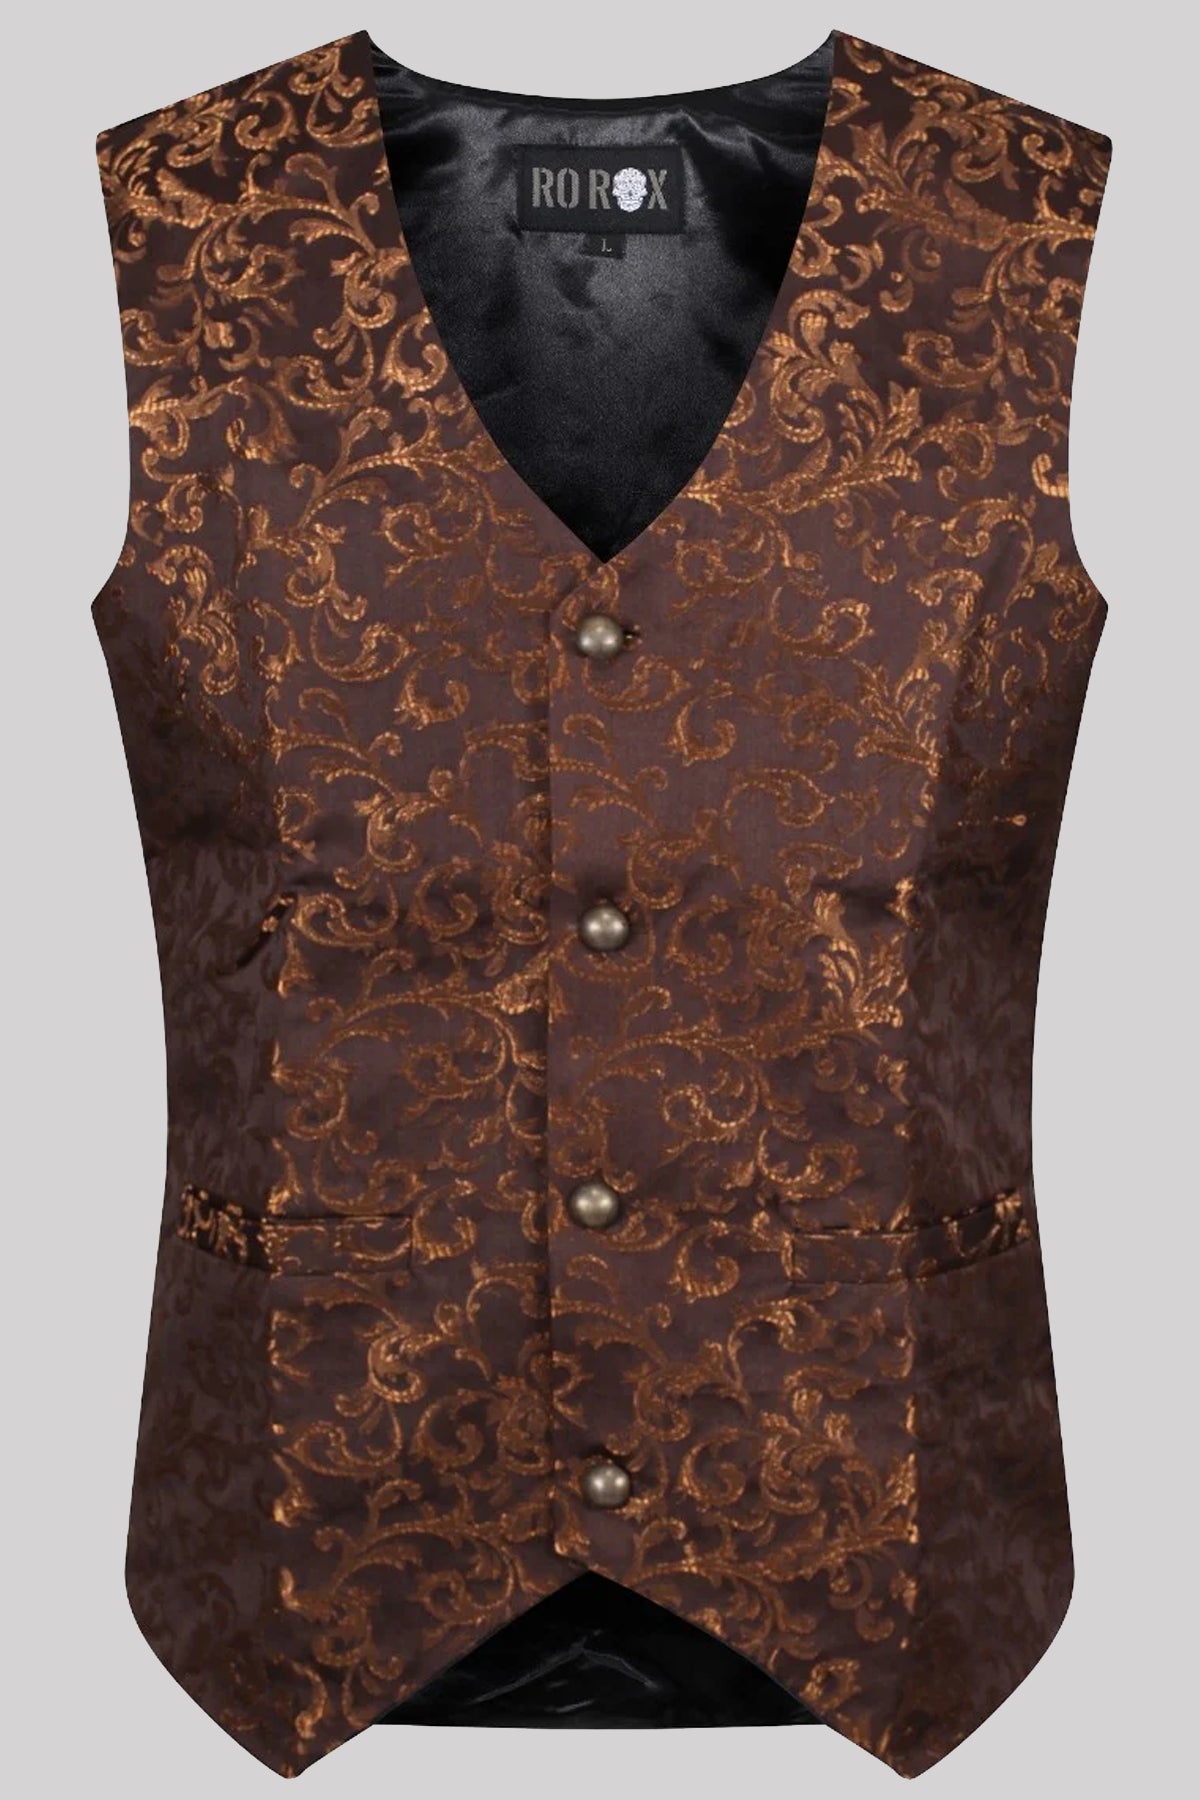 Ro Rox Brocade Steampunk Tailored Waistcoat